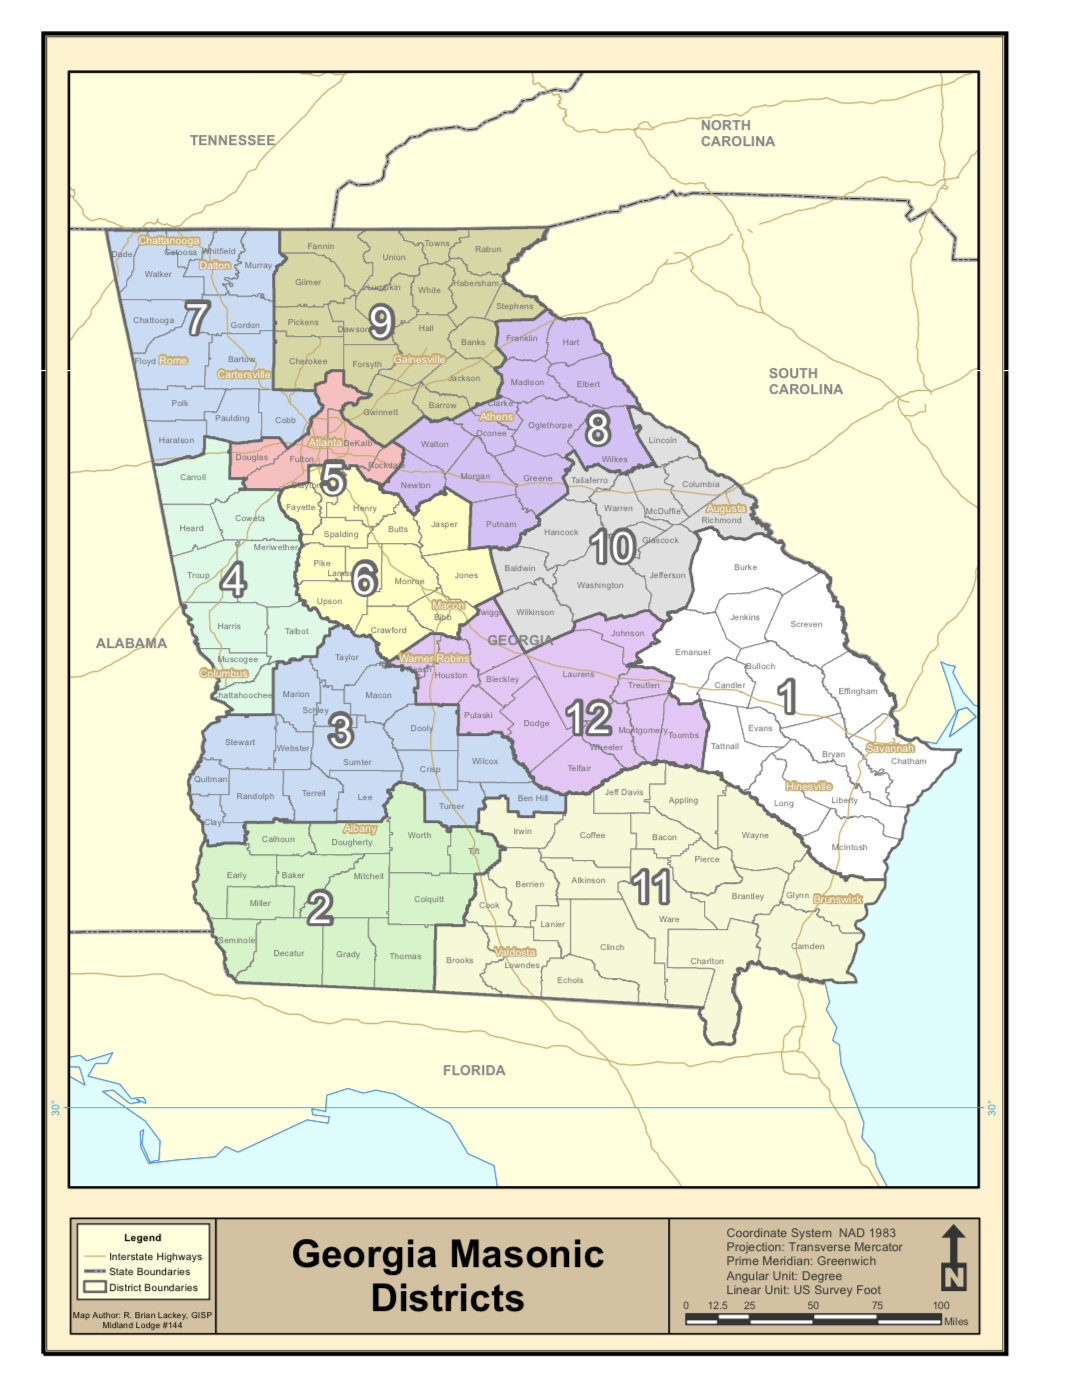 Georgia Masonic Districts